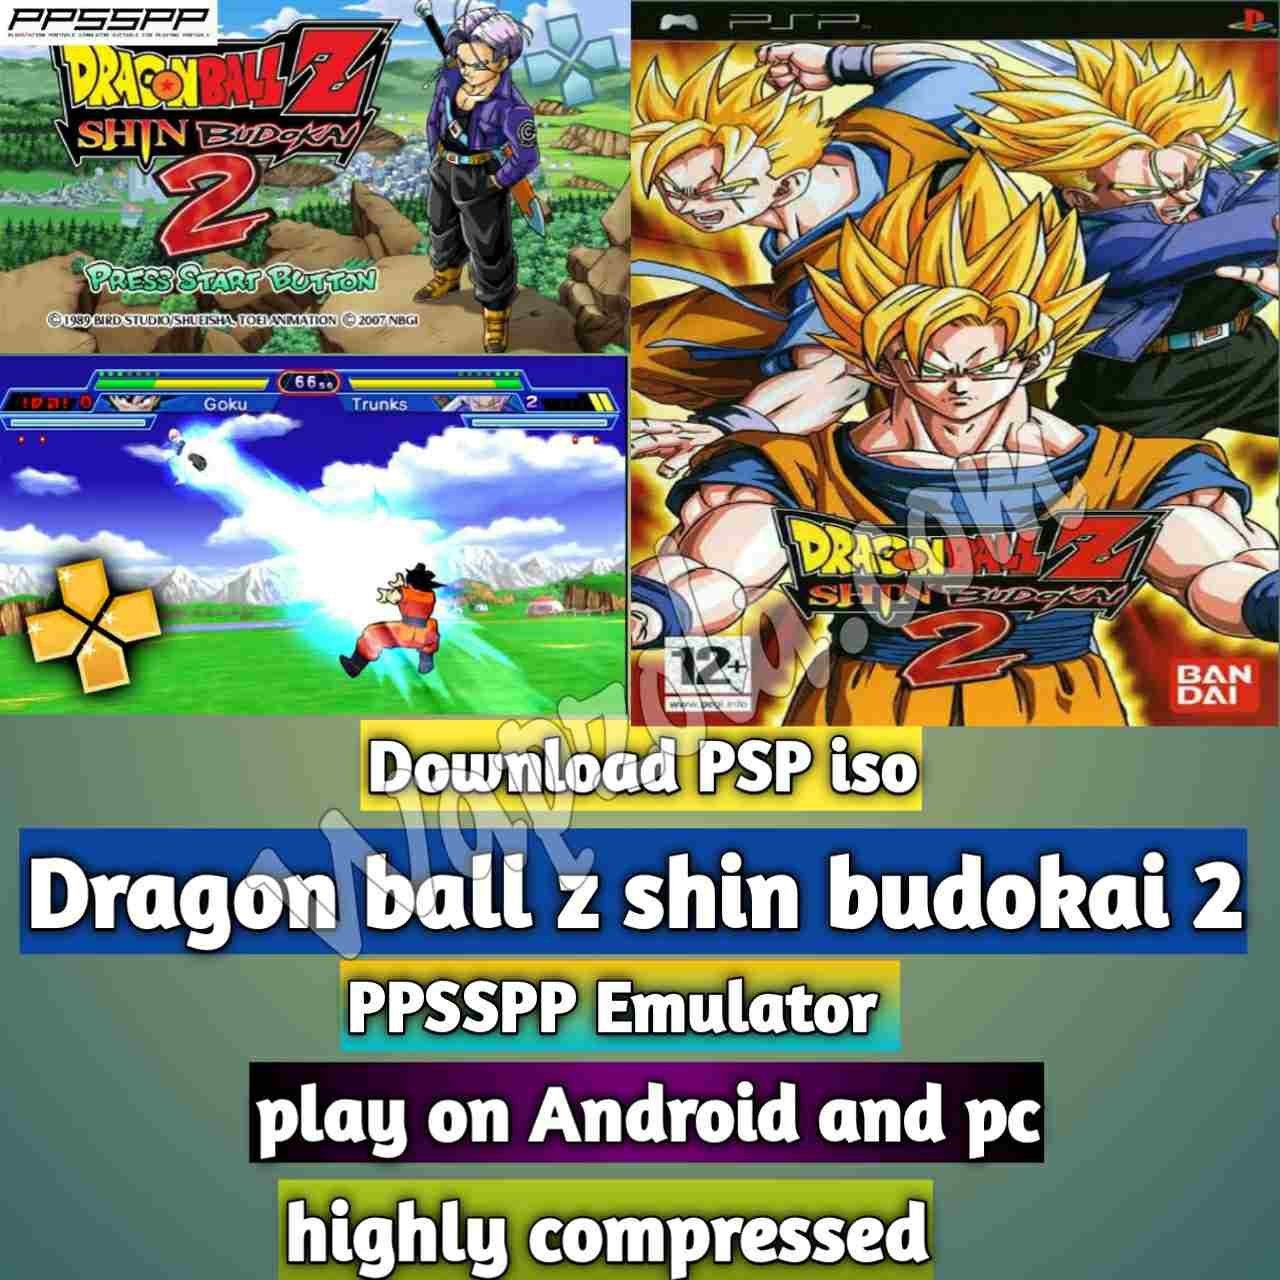 [Download] Dragon ball z shin budokai 2 iso ppsspp emulator – PSP APK Iso ROM altamente comprimido 300MB 9